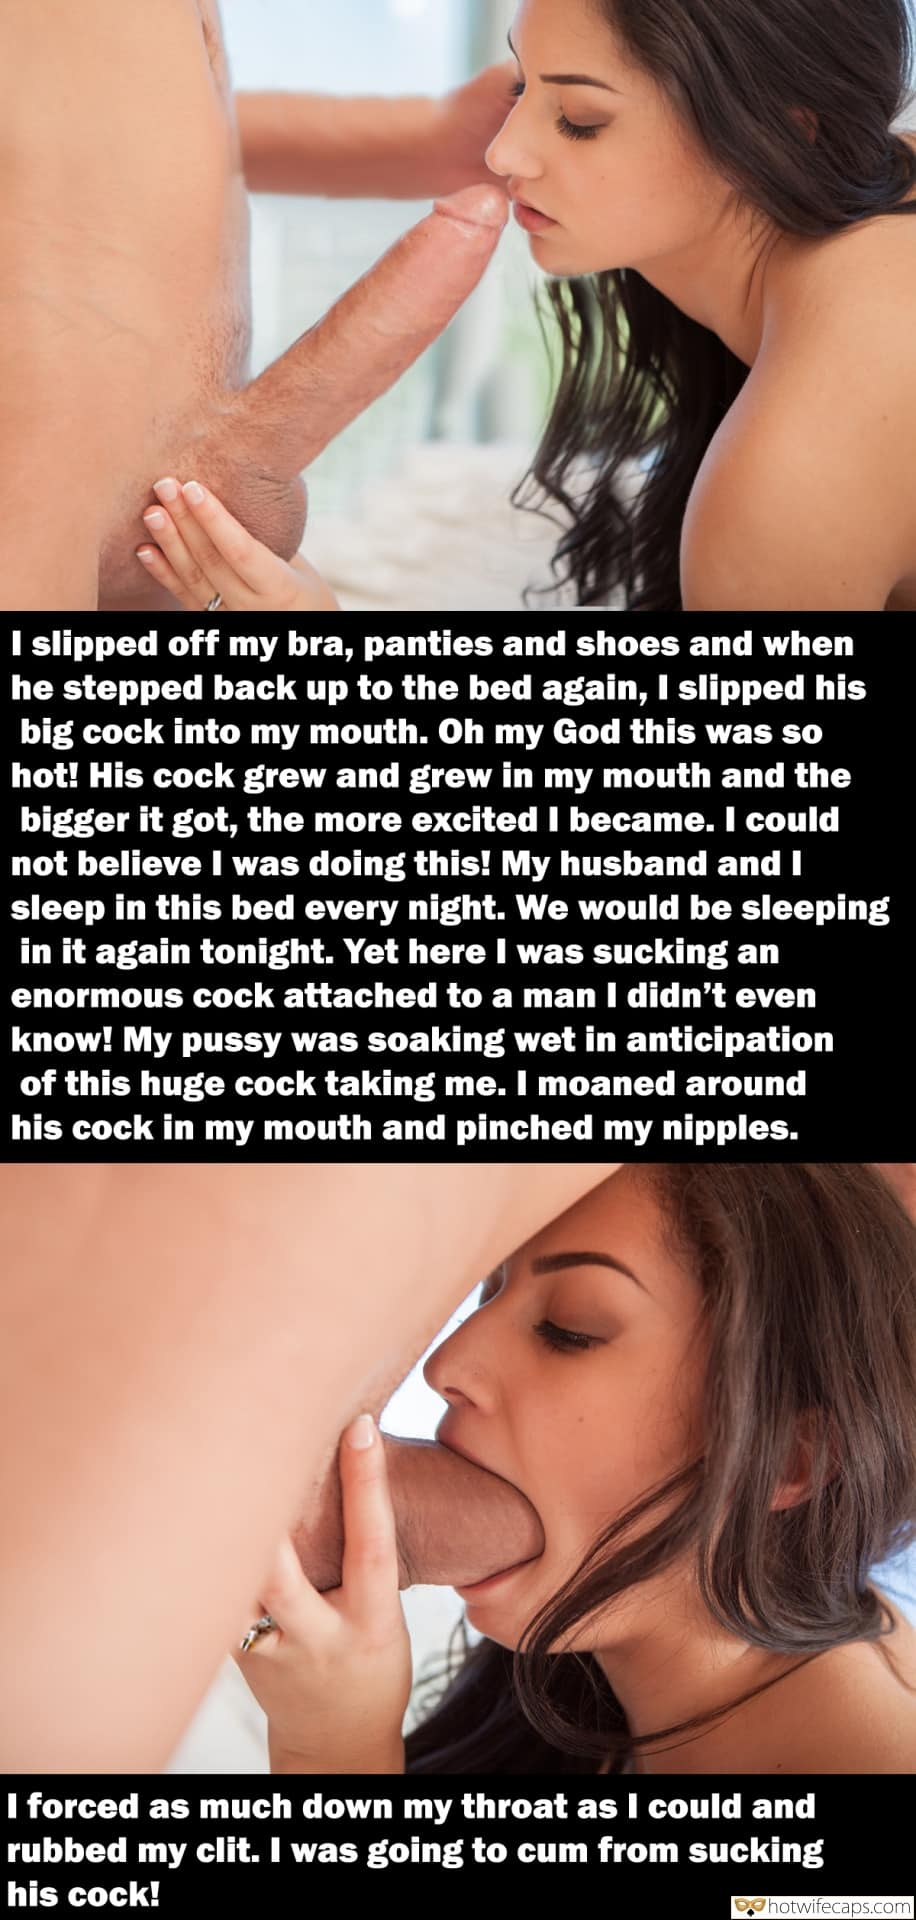 My boyfriend suck dick story cum Blowjob Hotwife Captions Cuckold Blowjob Memes And Quotes Hotwifecaps Com